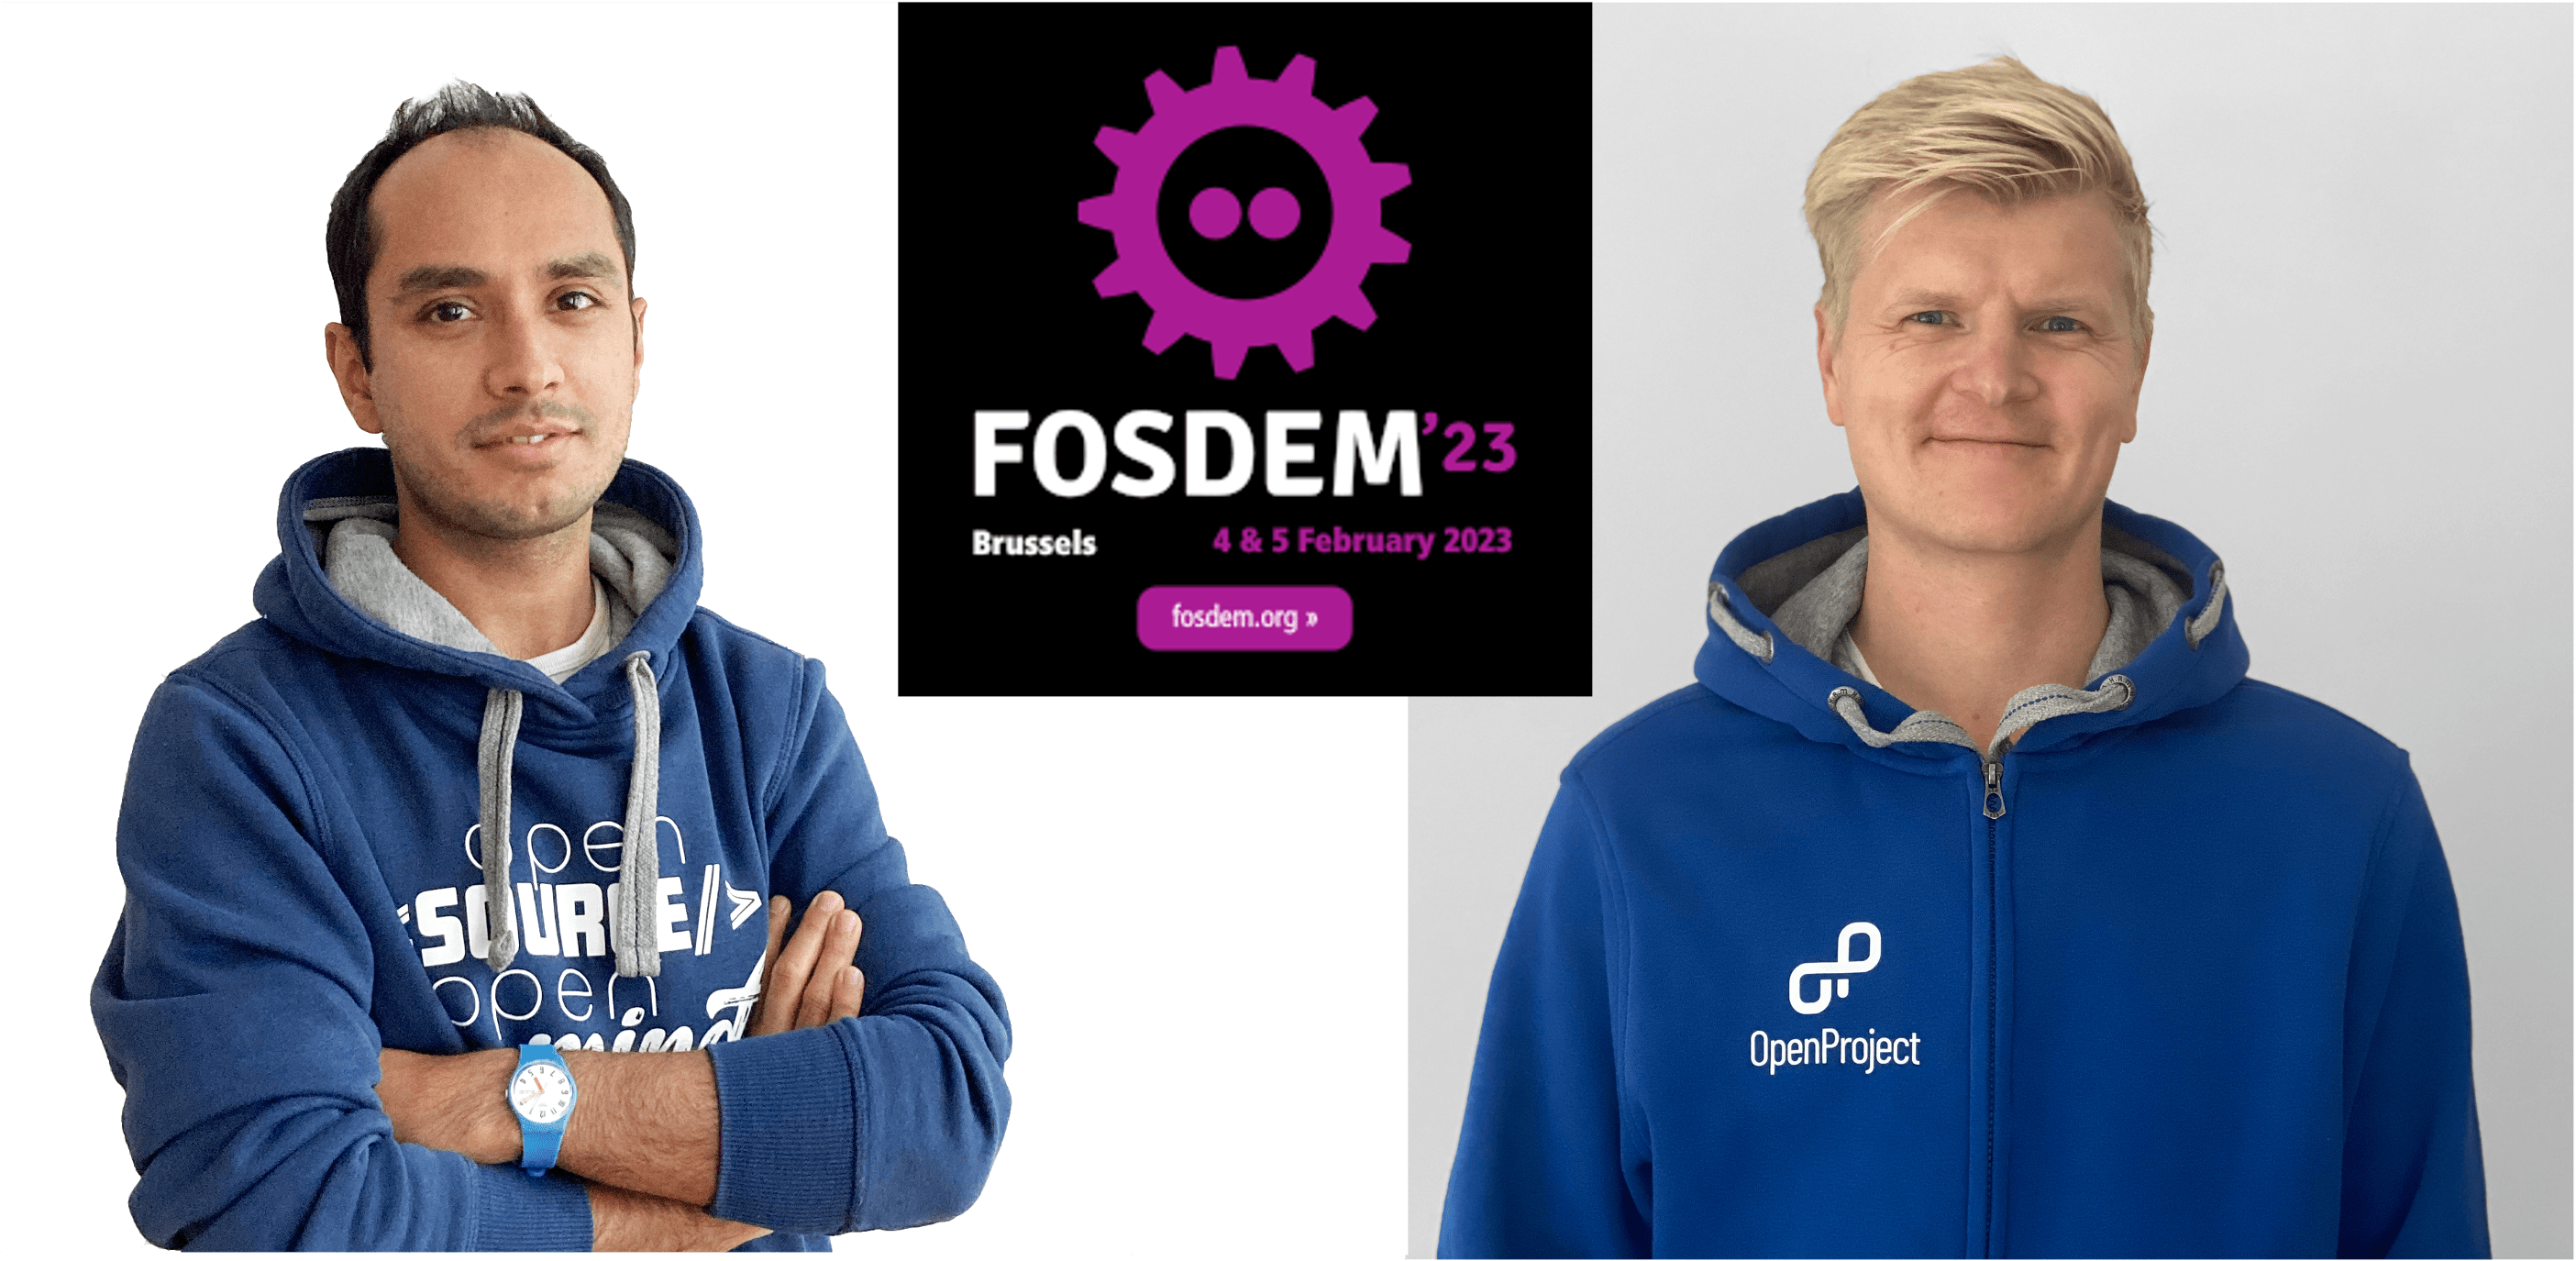 OpenProject at FOSDEM 2023